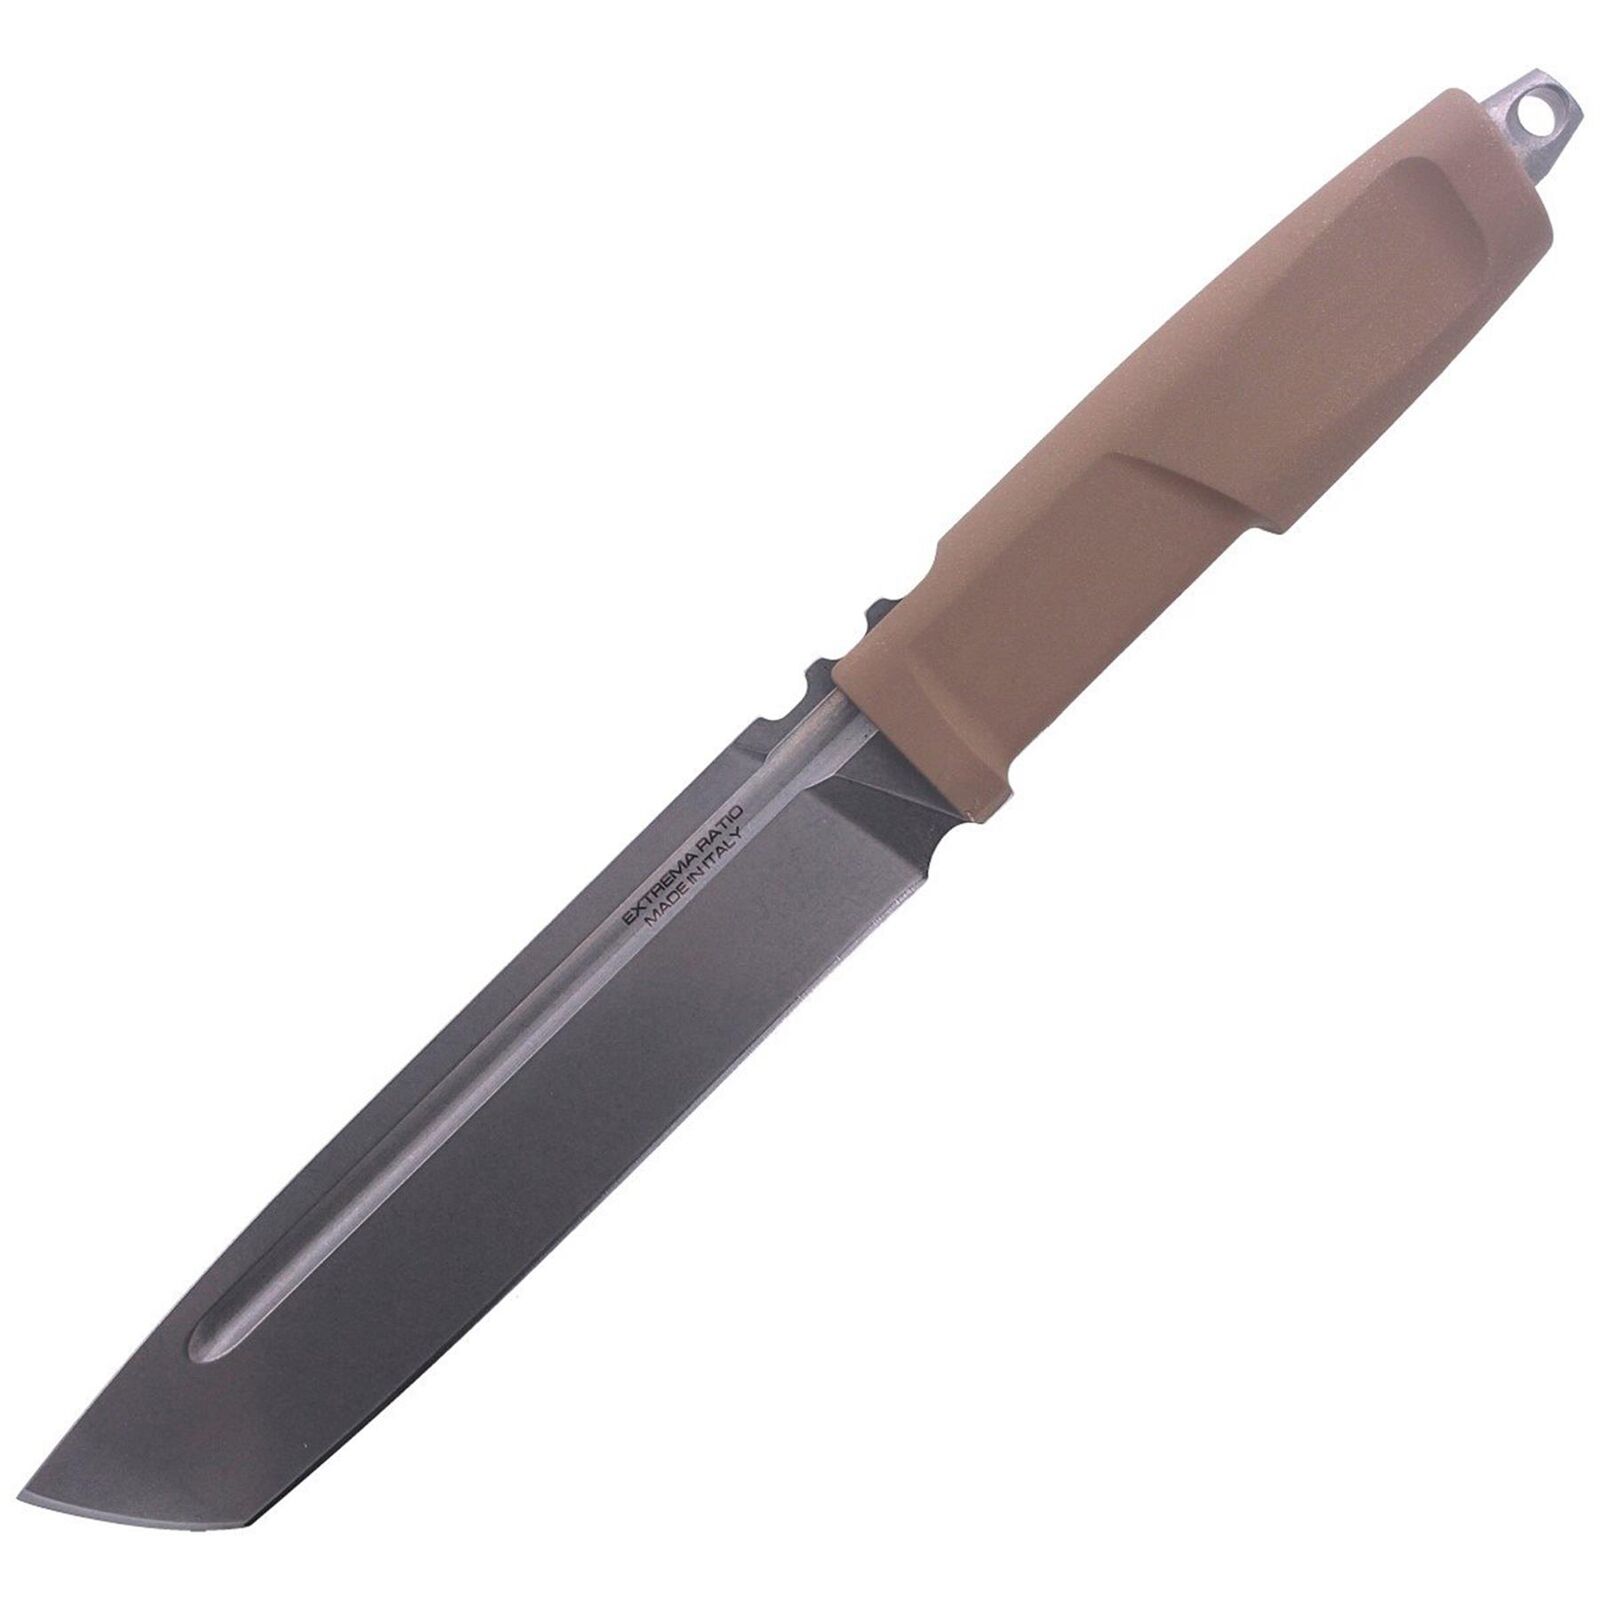 Extrema Ratio GIANT MAMBA DESERT knife multipurpose plain-edged tanto N690 blade